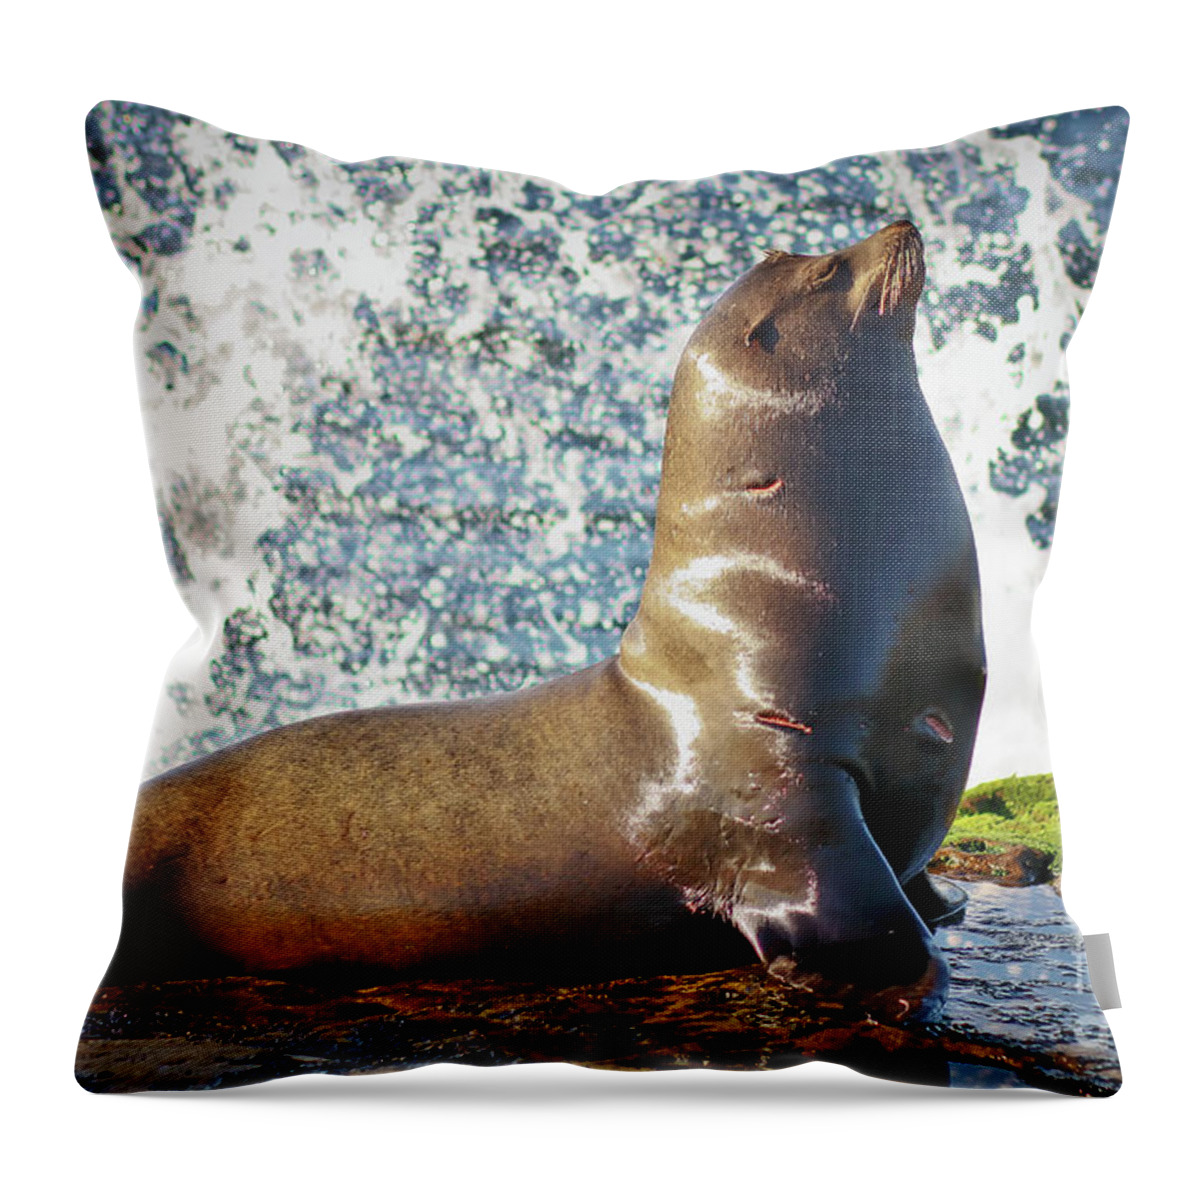 La Jolla Throw Pillow featuring the photograph California Sea Lion at La Jolla Cove by Sam Antonio